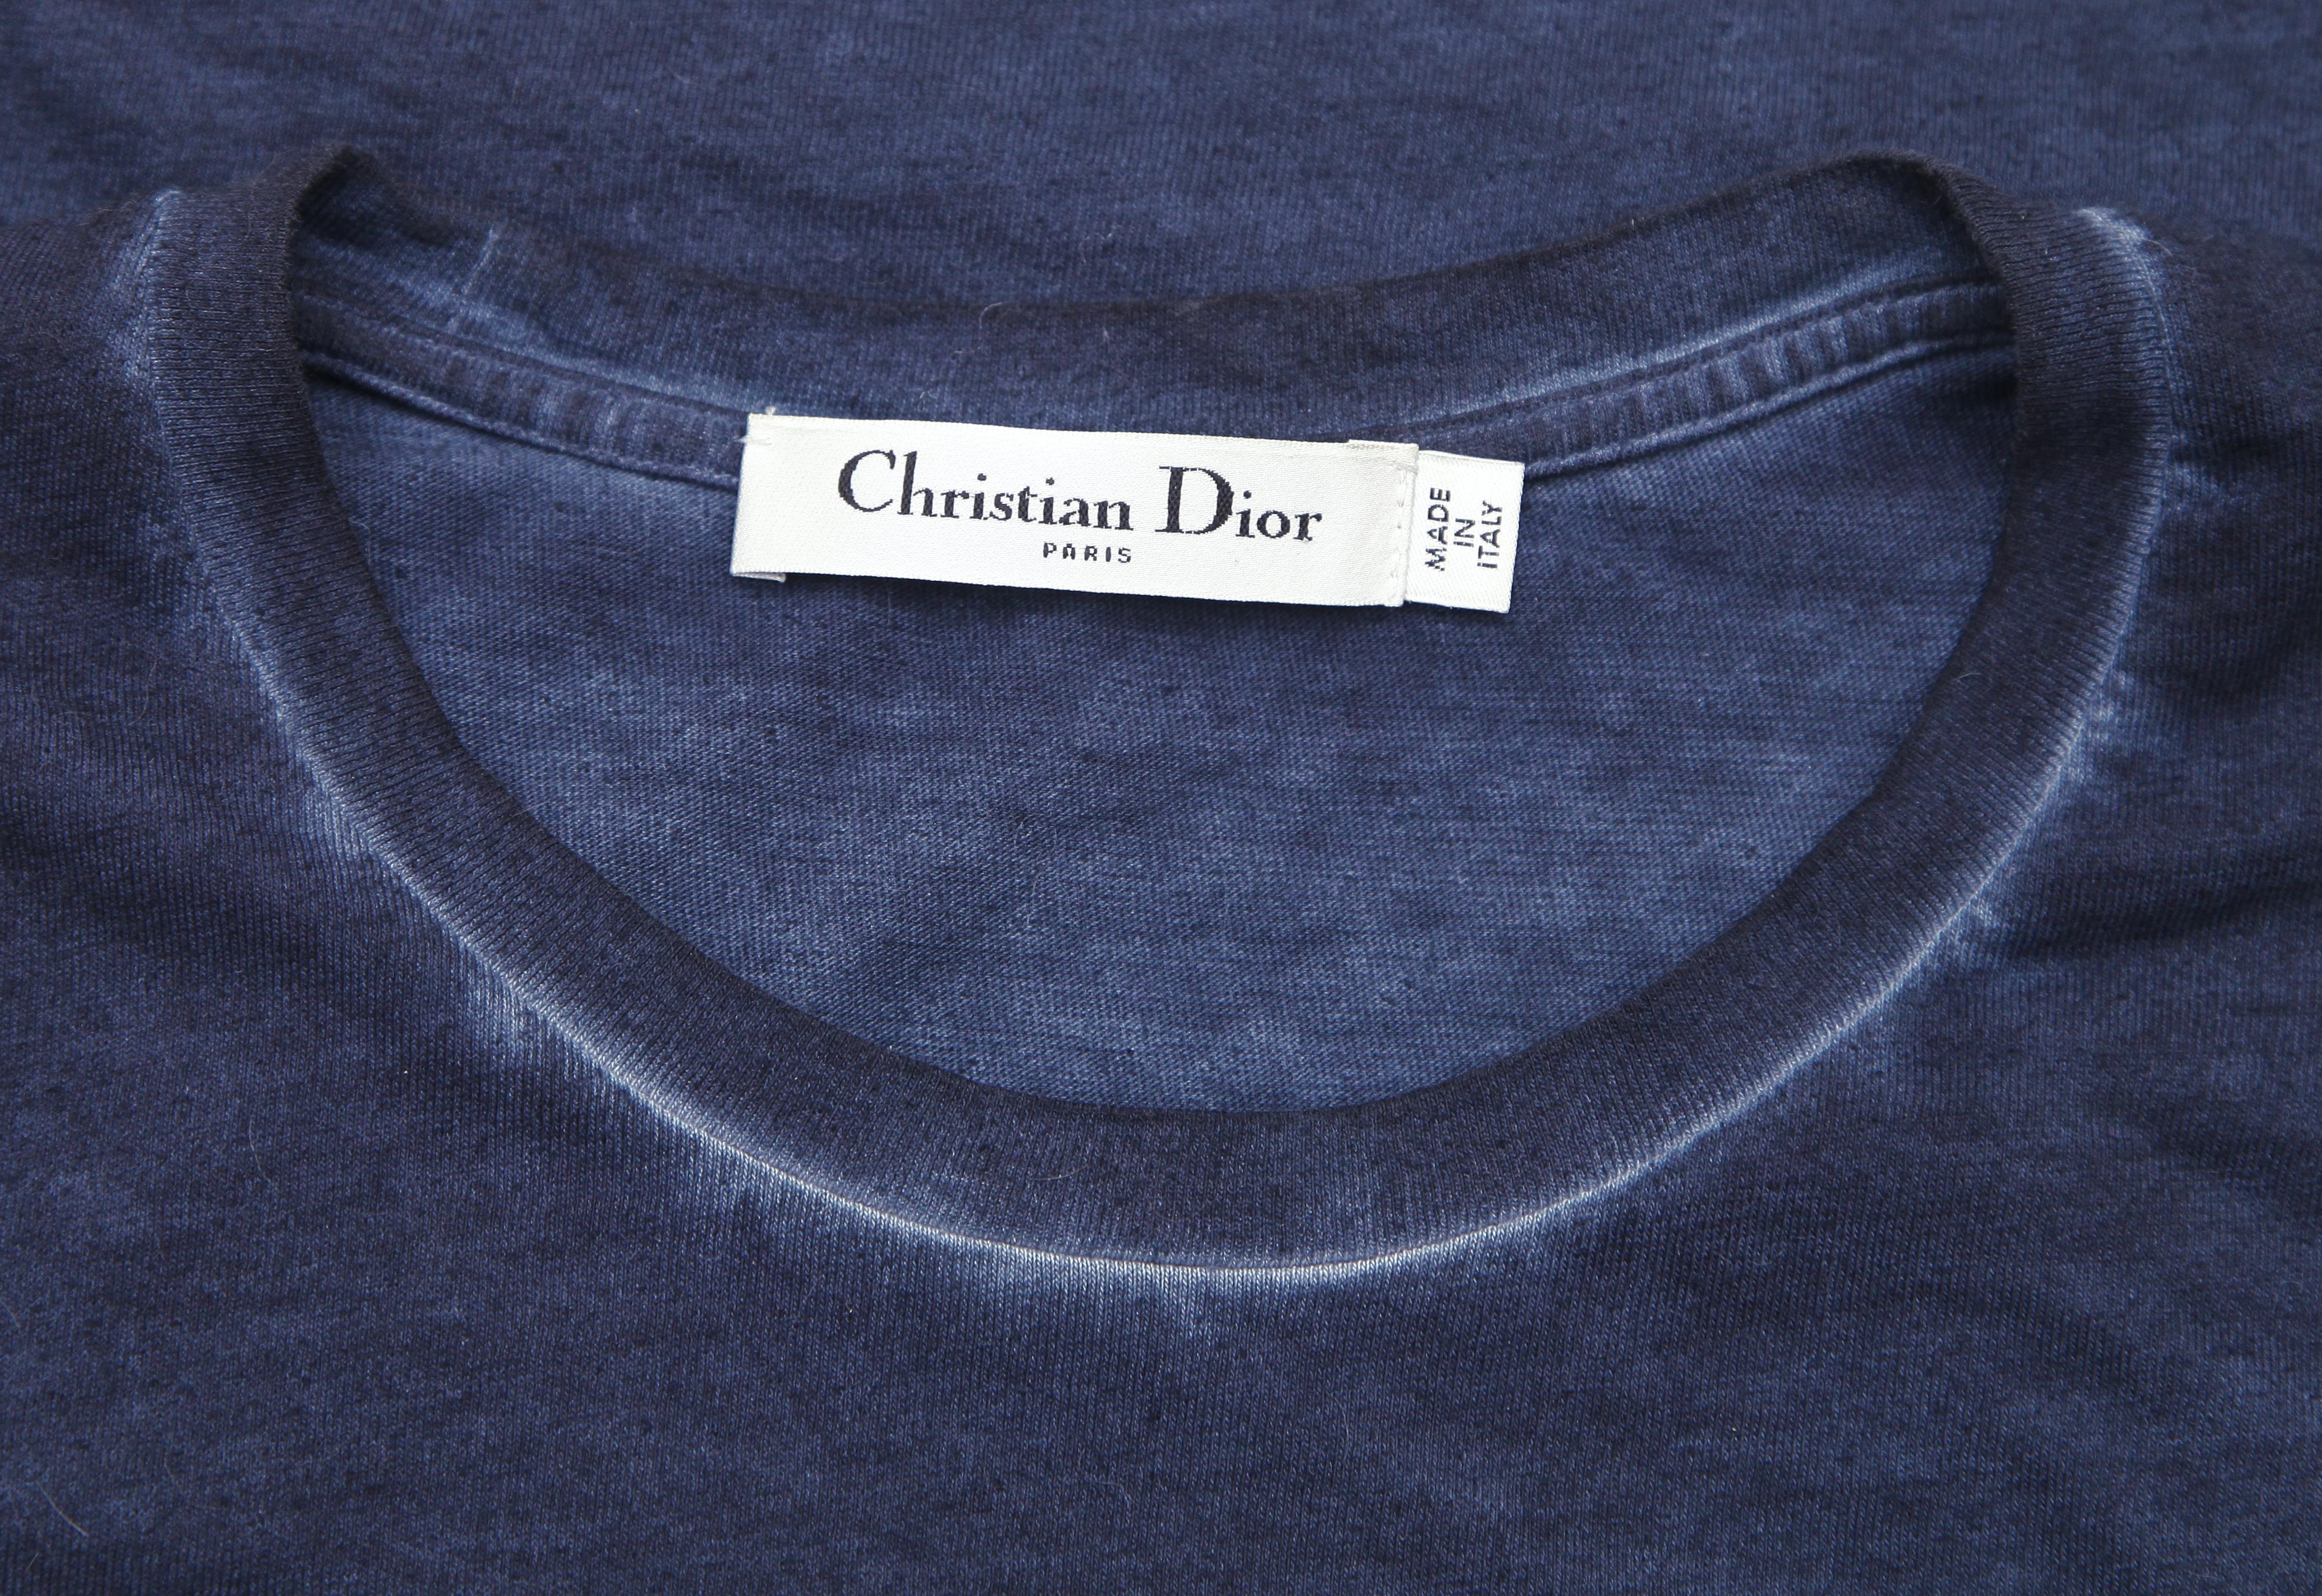 CHRISTIAN DIOR T-Shirt Top Tie-Dye Navy Blue Denim J'ADIOR 8 Short Sleeve Sz XS For Sale 1